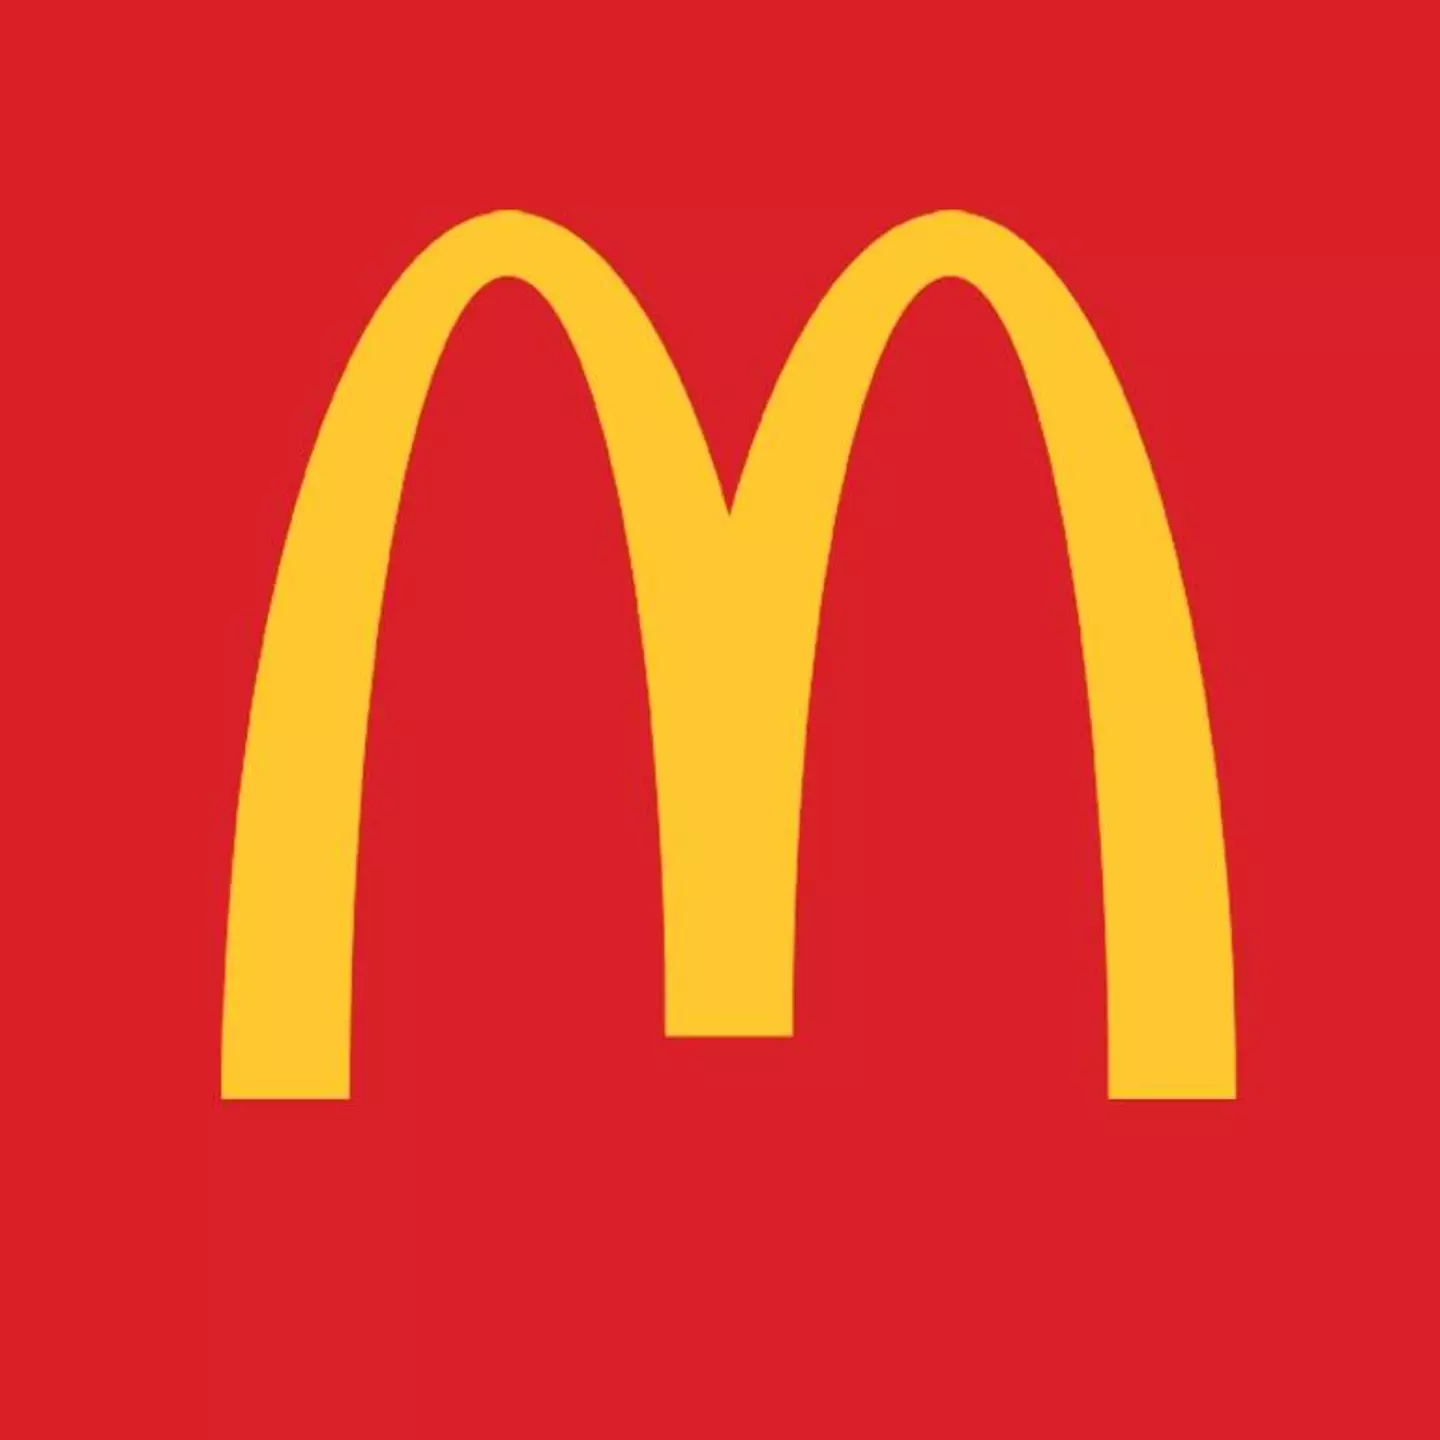 McDonald's Australia